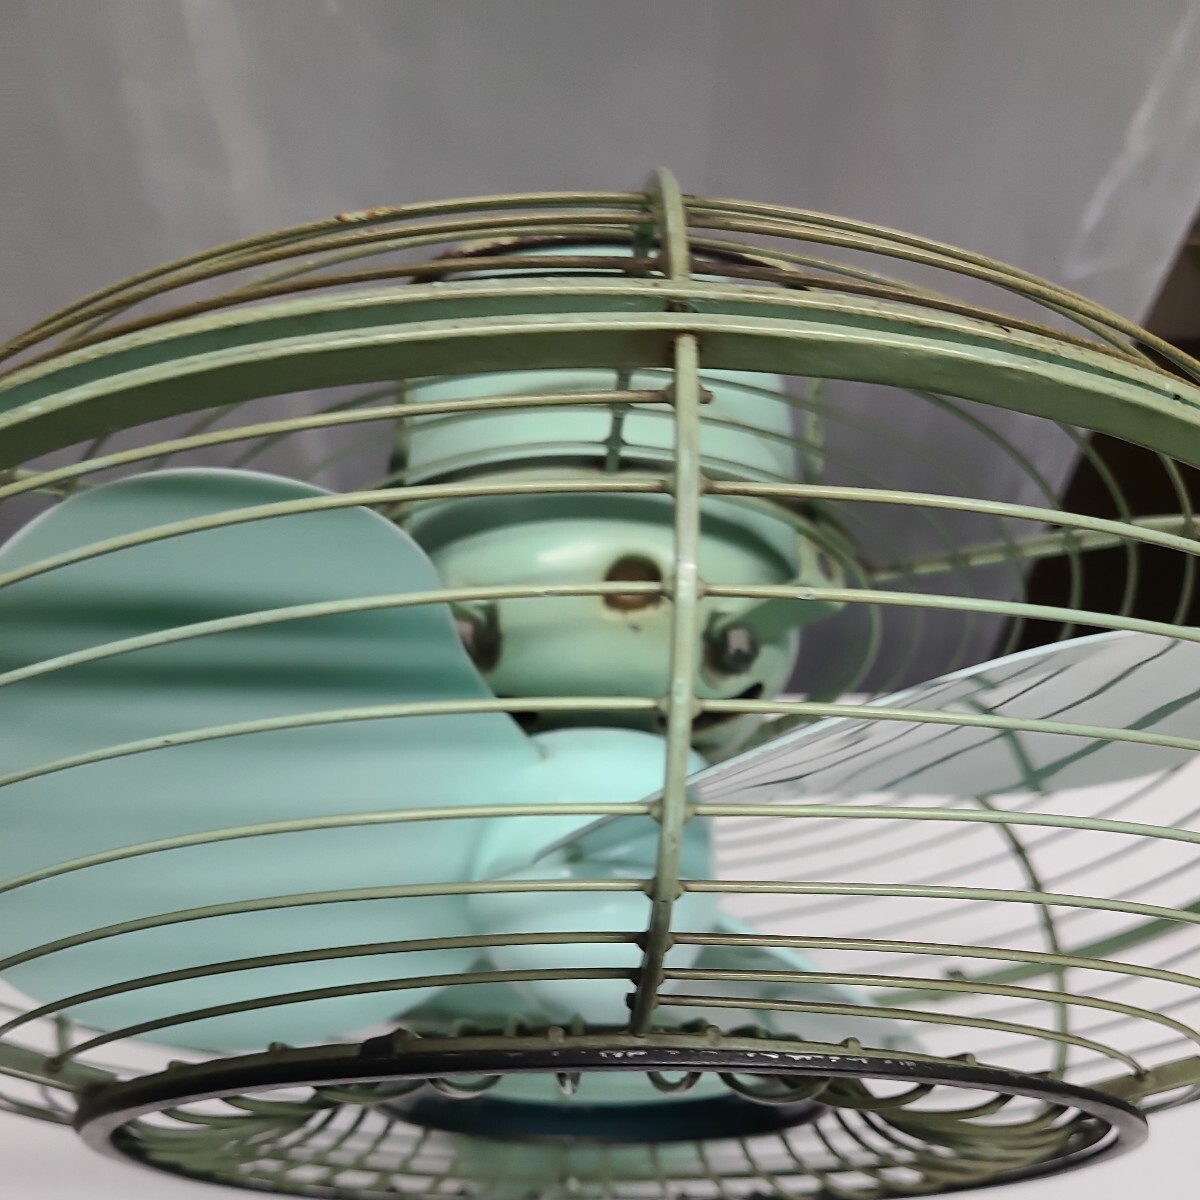  Showa Retro античный вентилятор Mitsubishi подлинная вещь 